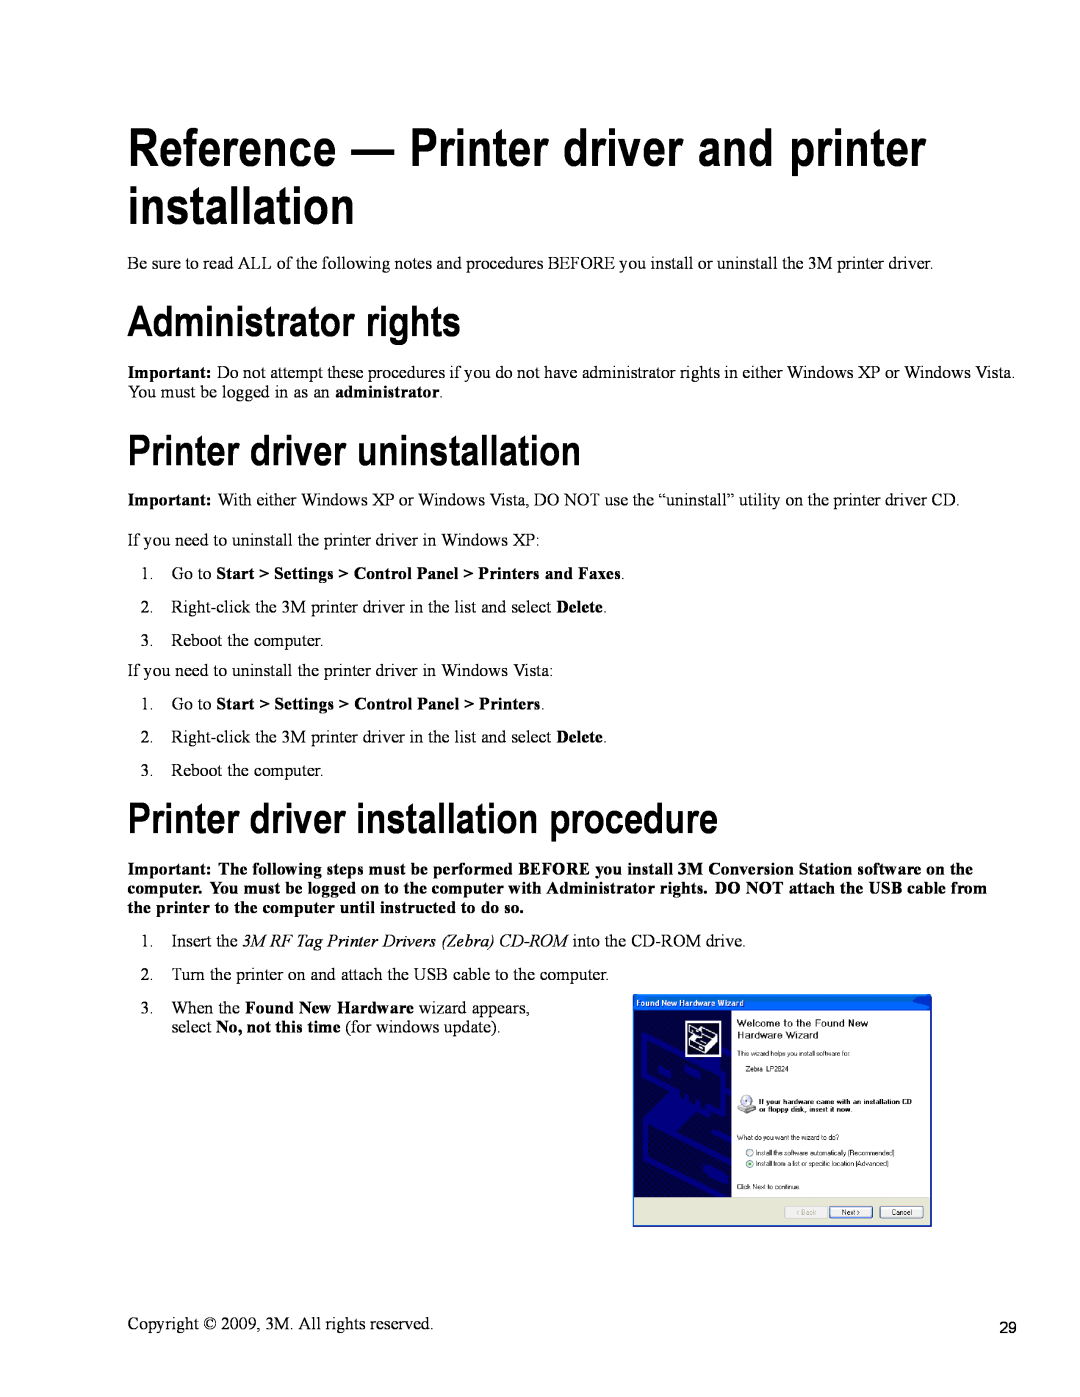 3M 813 Reference - Printer driver and printer installation, Administrator rights, Printer driver uninstallation 